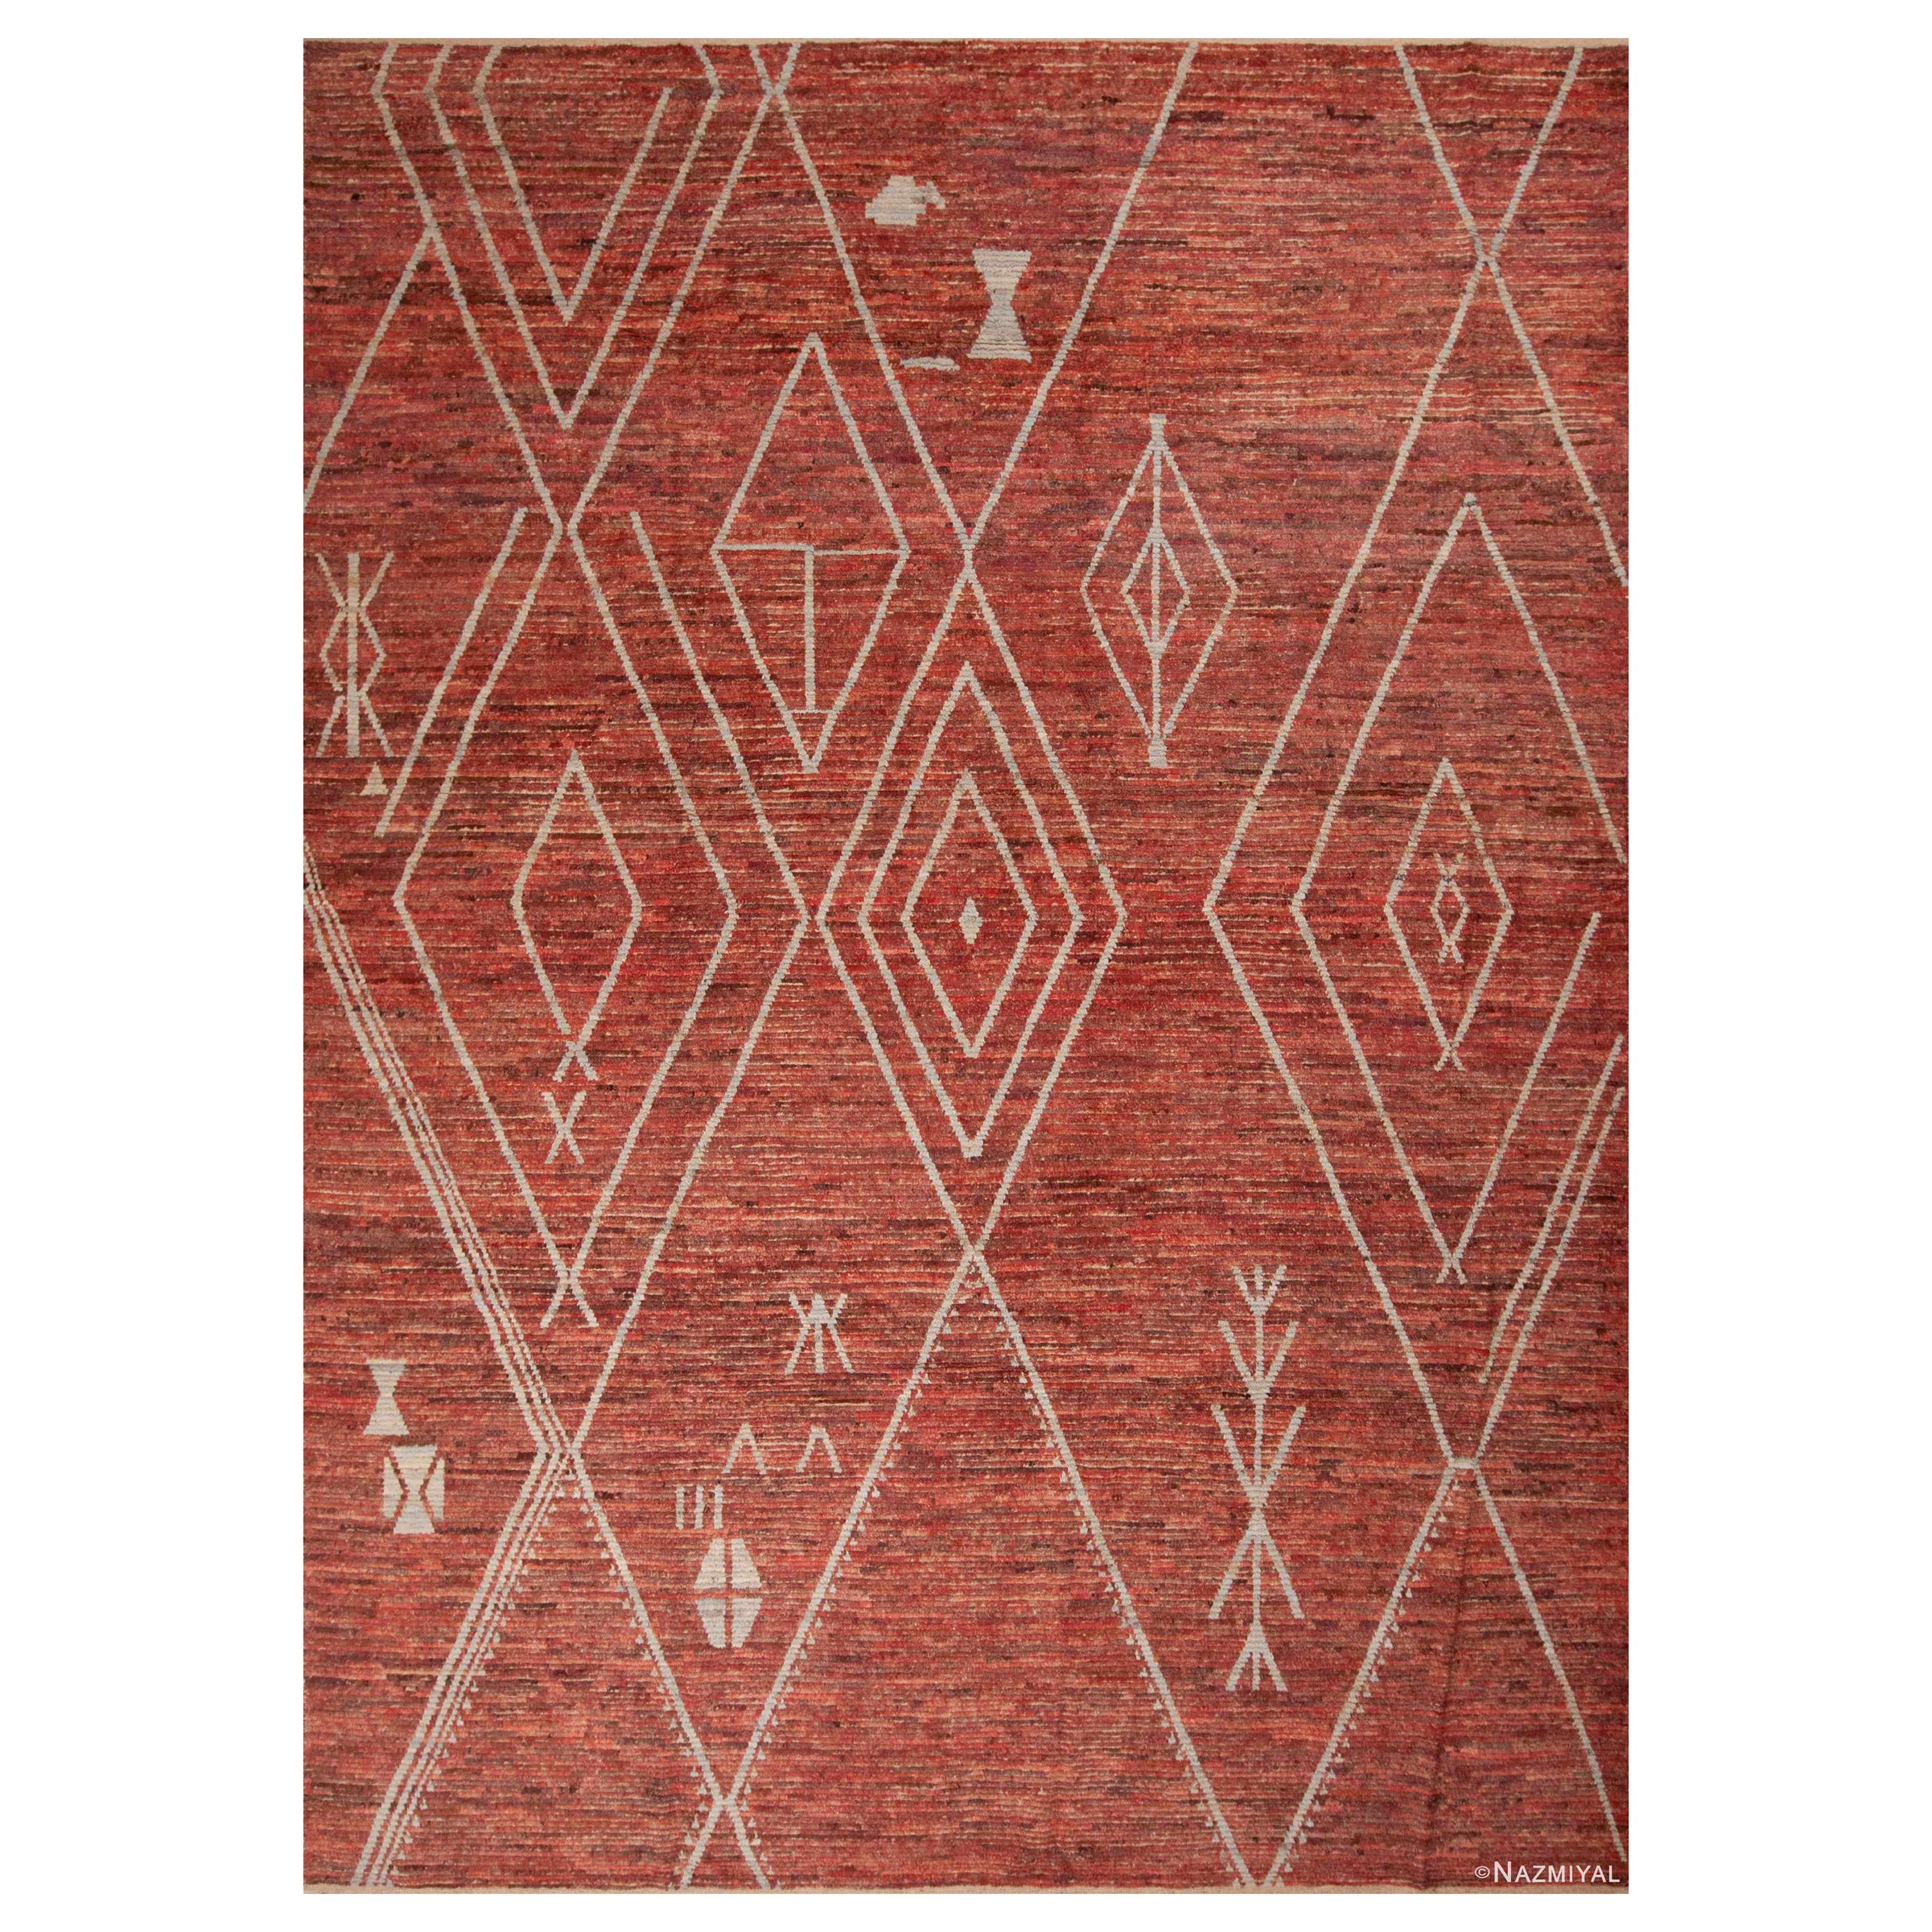 Nazmiyal Collection Tribal Beni Ourain Design Modern Rustic Rug 10'2" x 14'2"